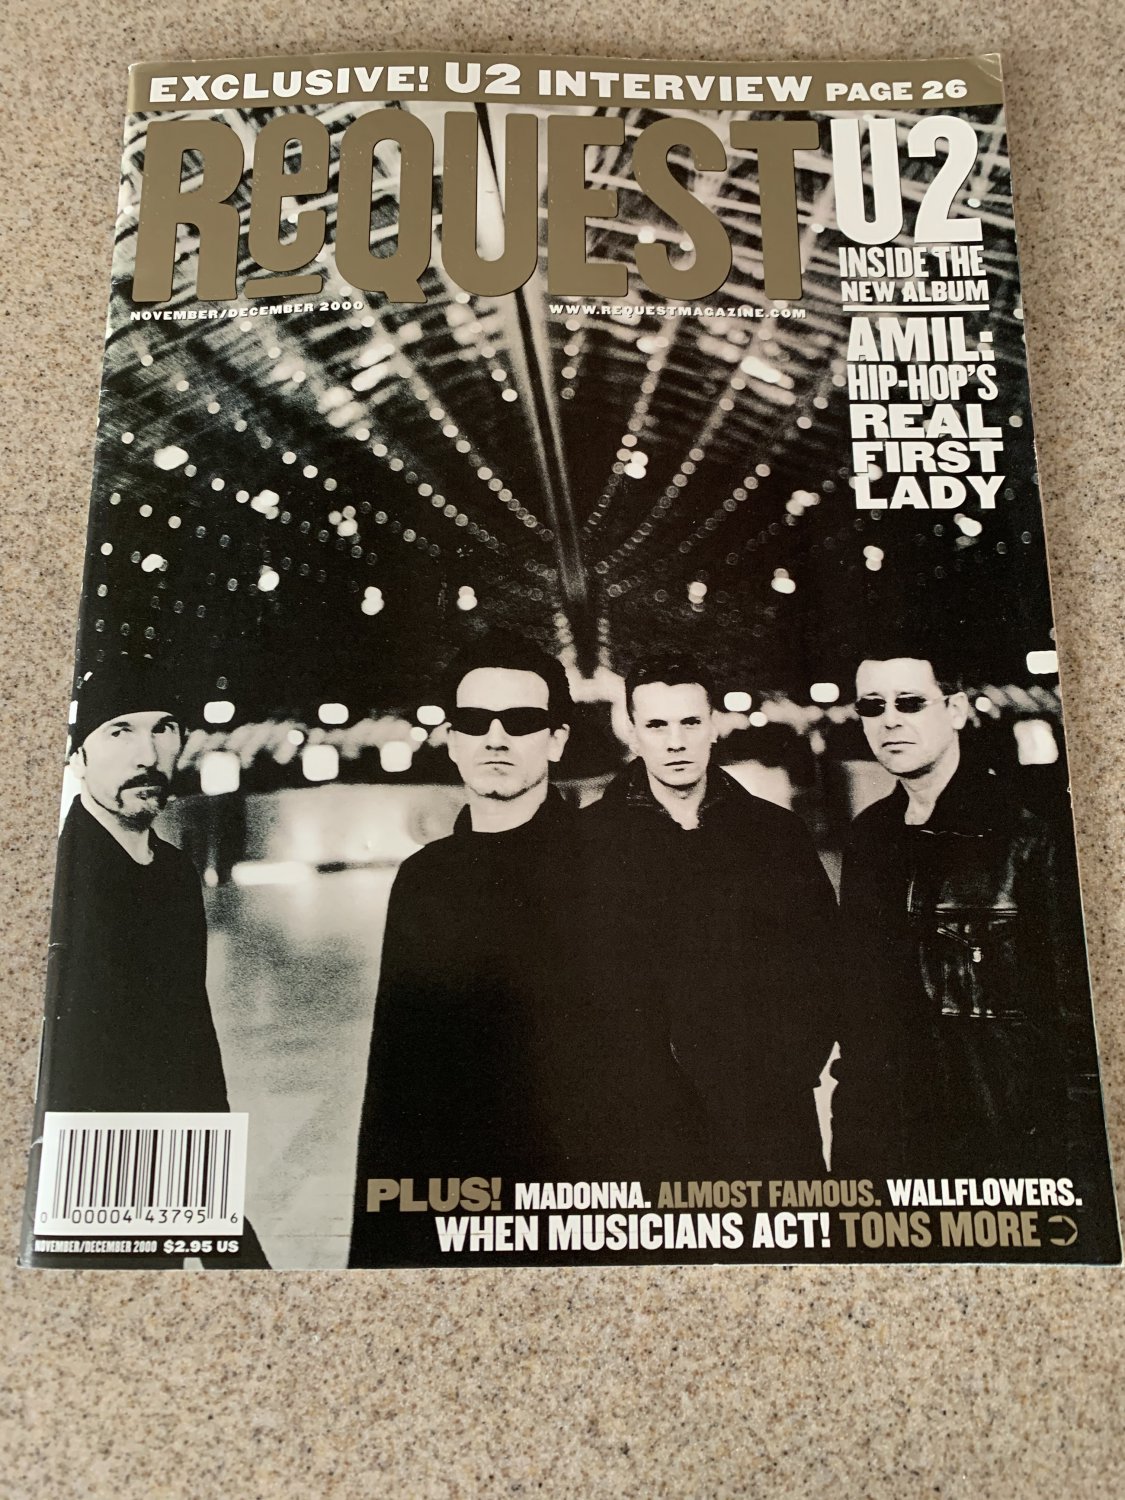 Request Magazine November/December 2000. U2 Cover & Interview, Bono & Edge